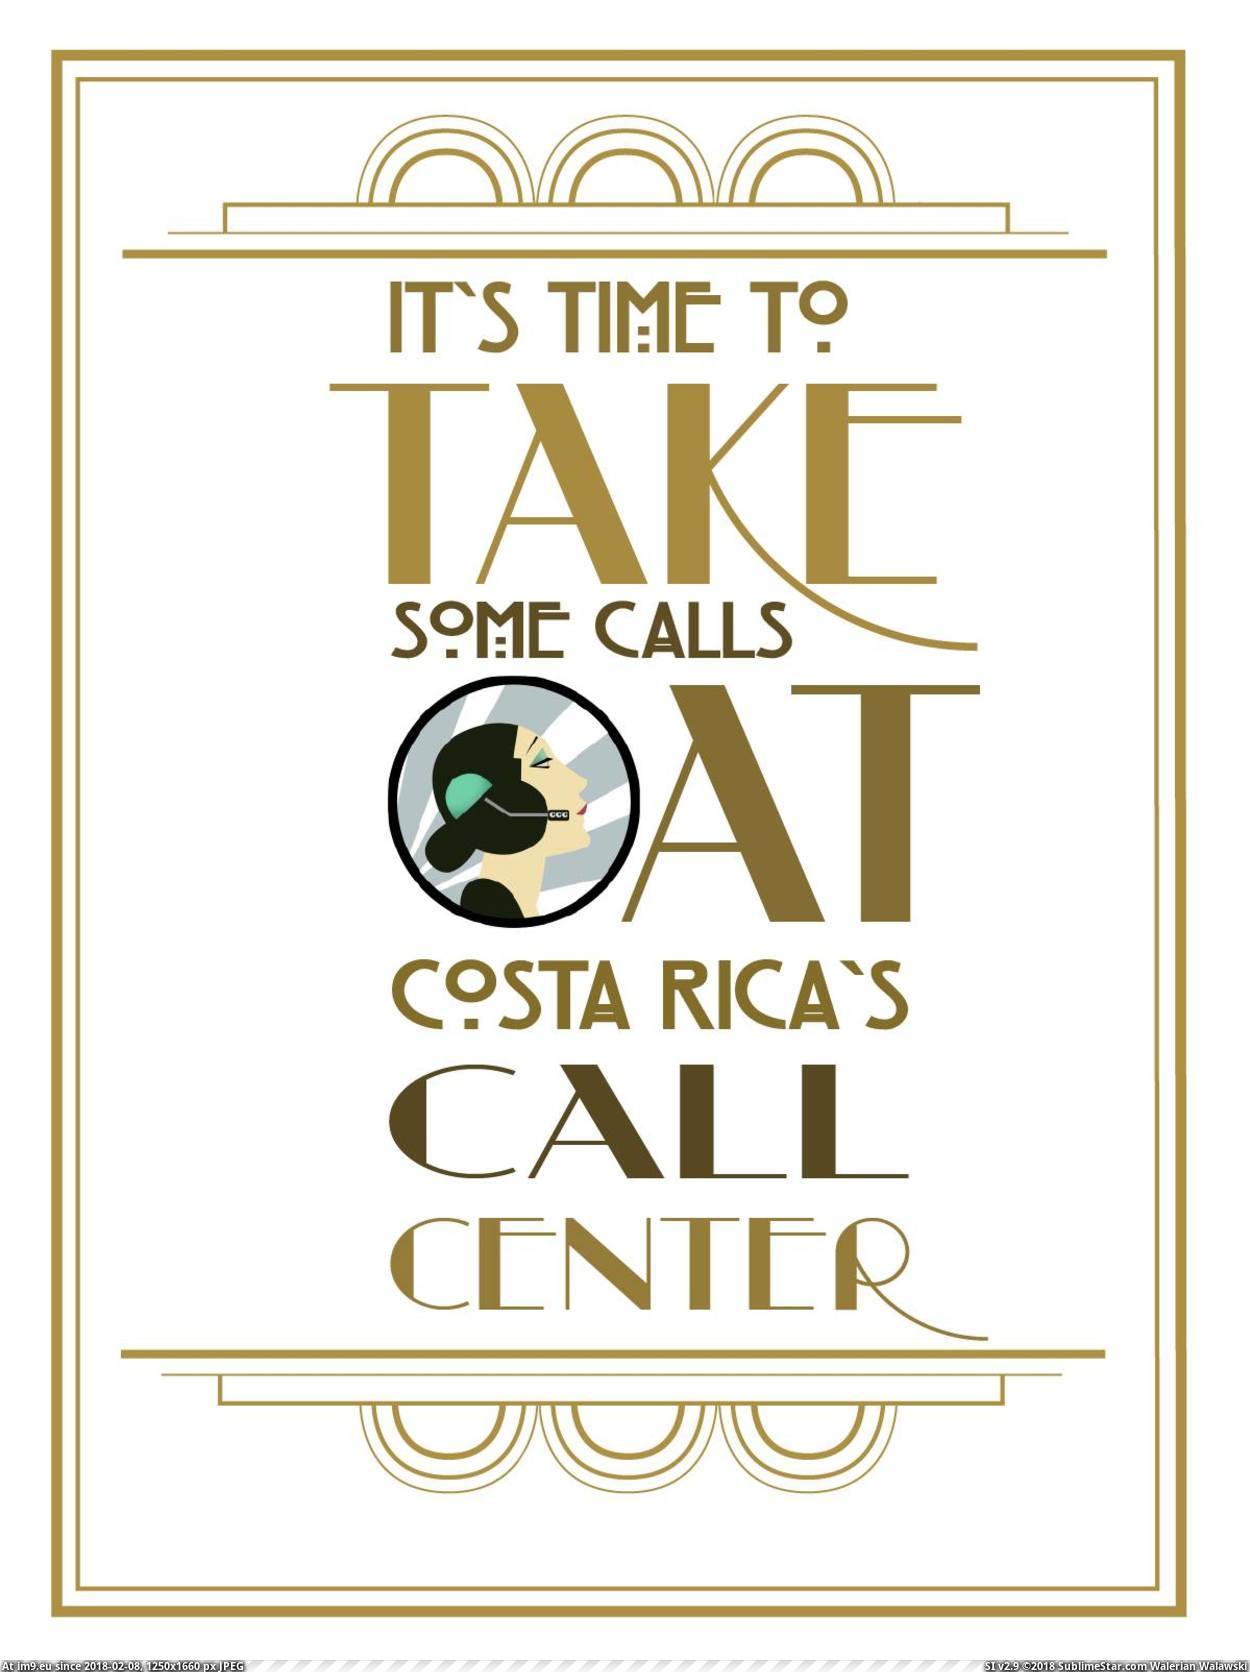 CALL CENTERS BILINGUAL TELEMARKETING JOB COSTA RICA (in COSTA RICA'S CALL CENTER TEN YEAR ANNIVERSARY)